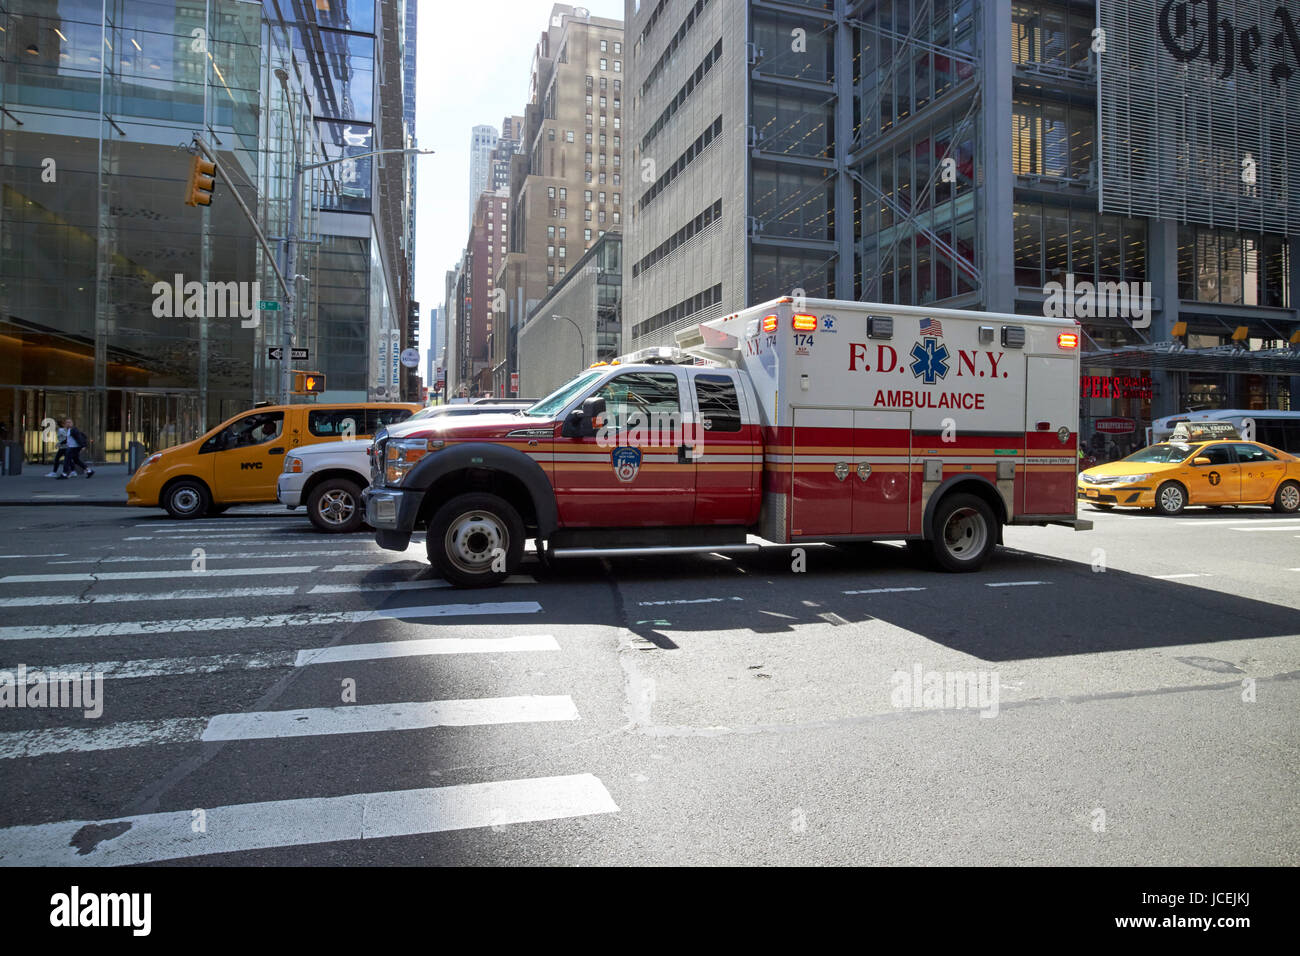 fdny ambulance New York City USA Stock Photo